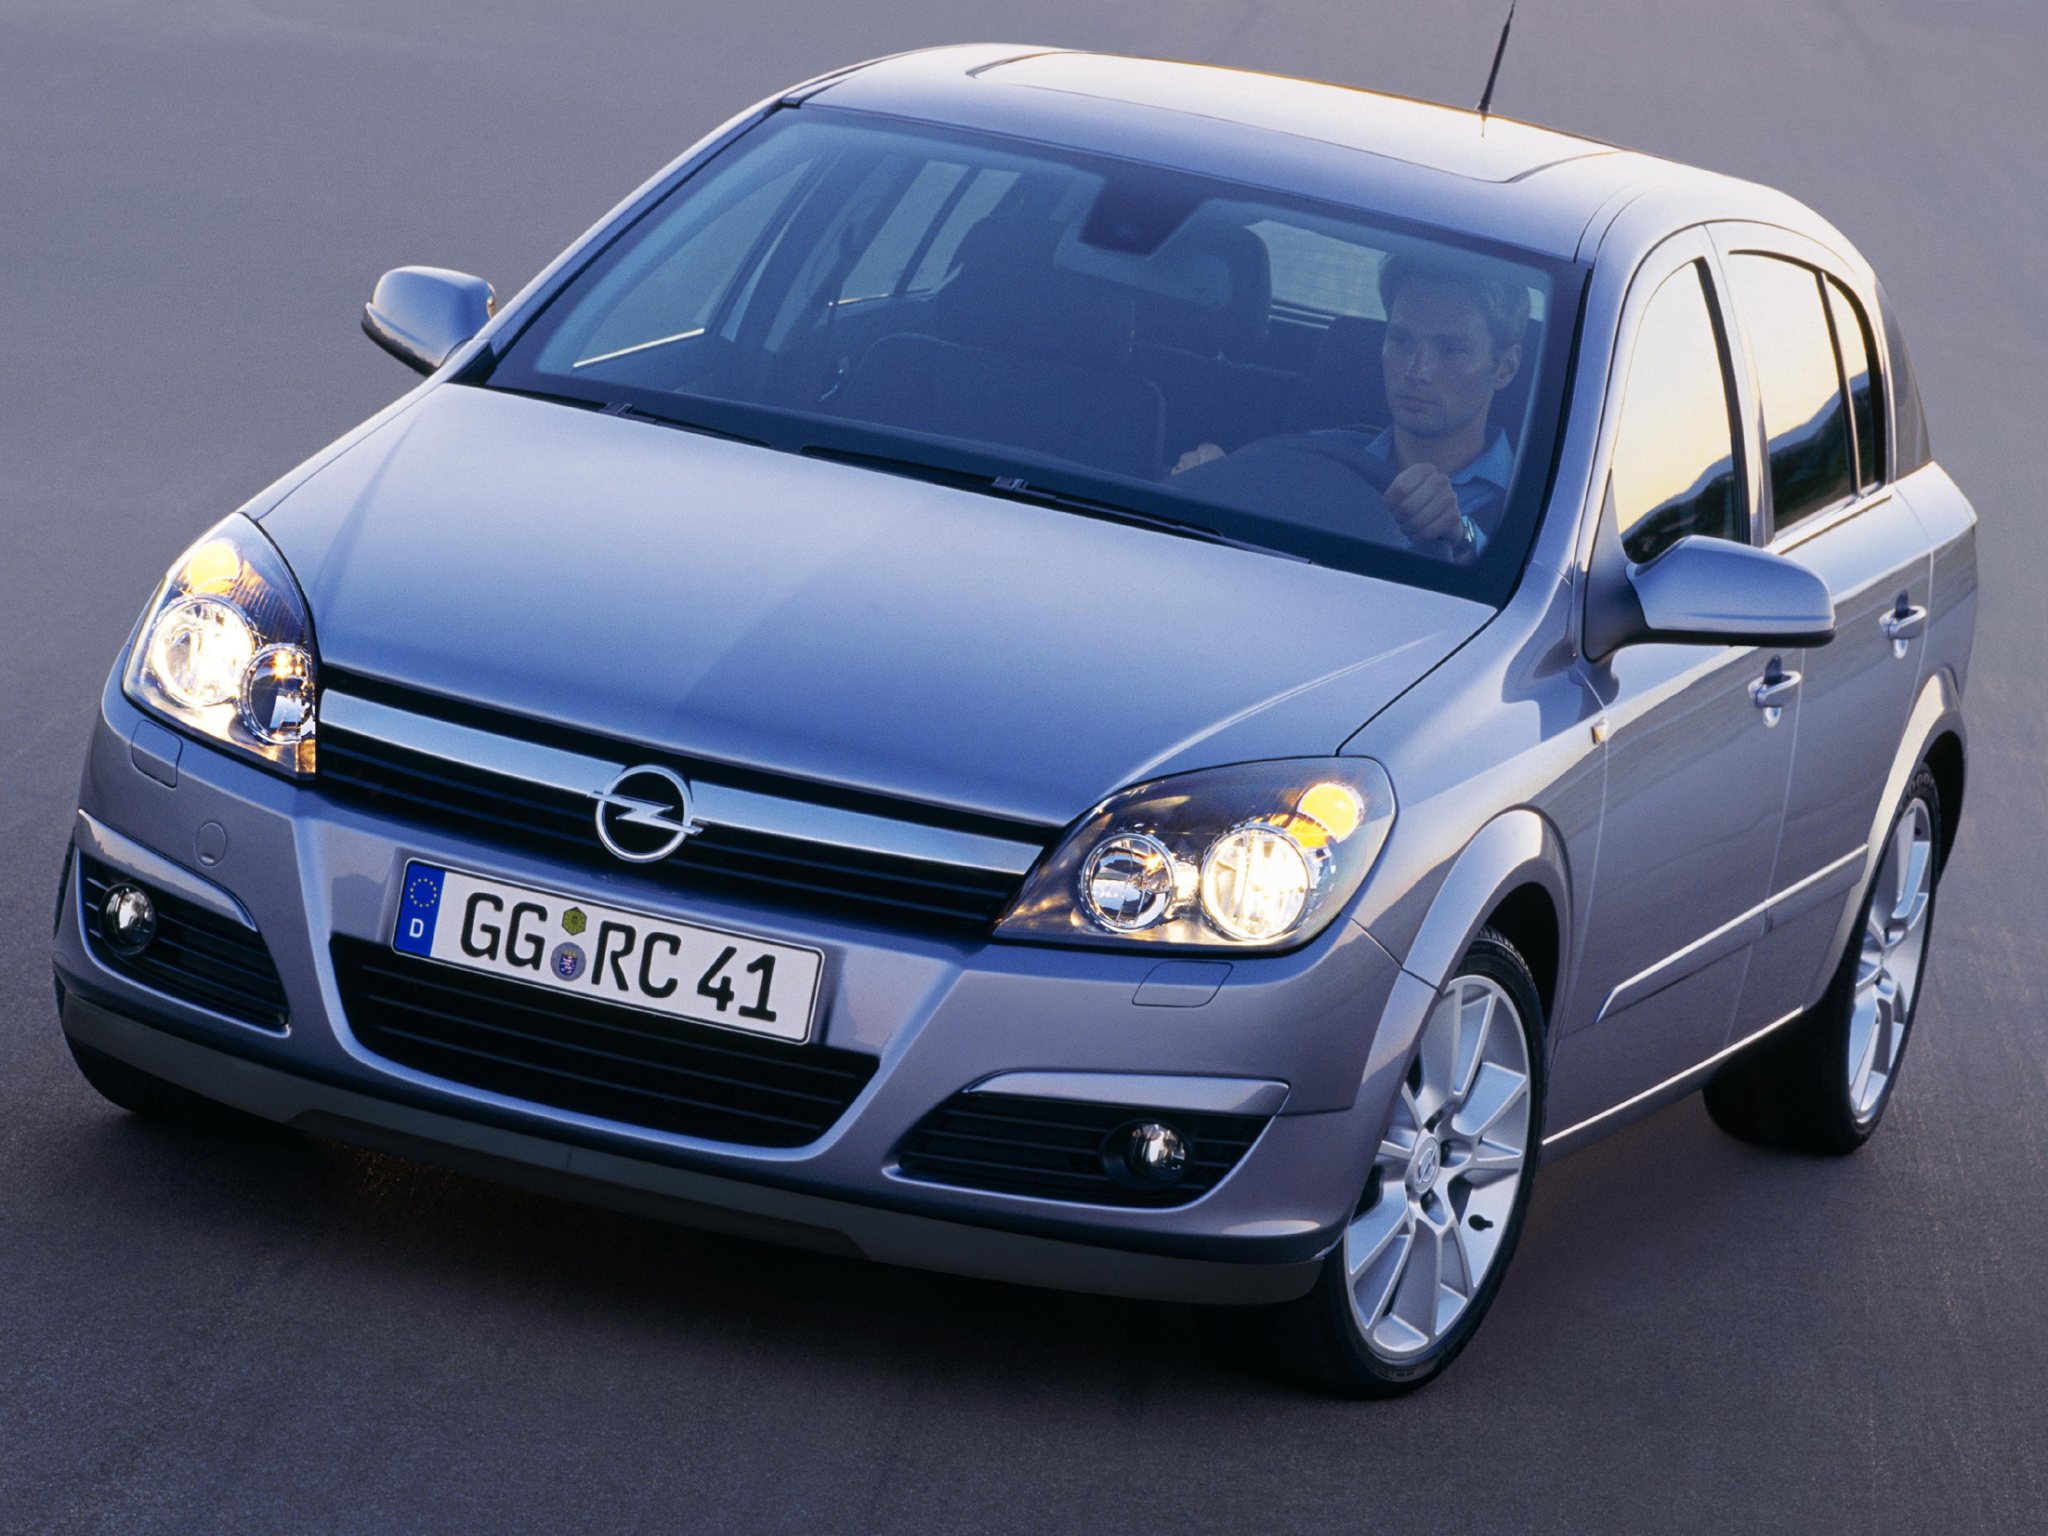 Б у авто опели. Opel Astra h 2004. Opel Astra h (2004-2007). Opel Astra 2004. Opel Astra h 2005.